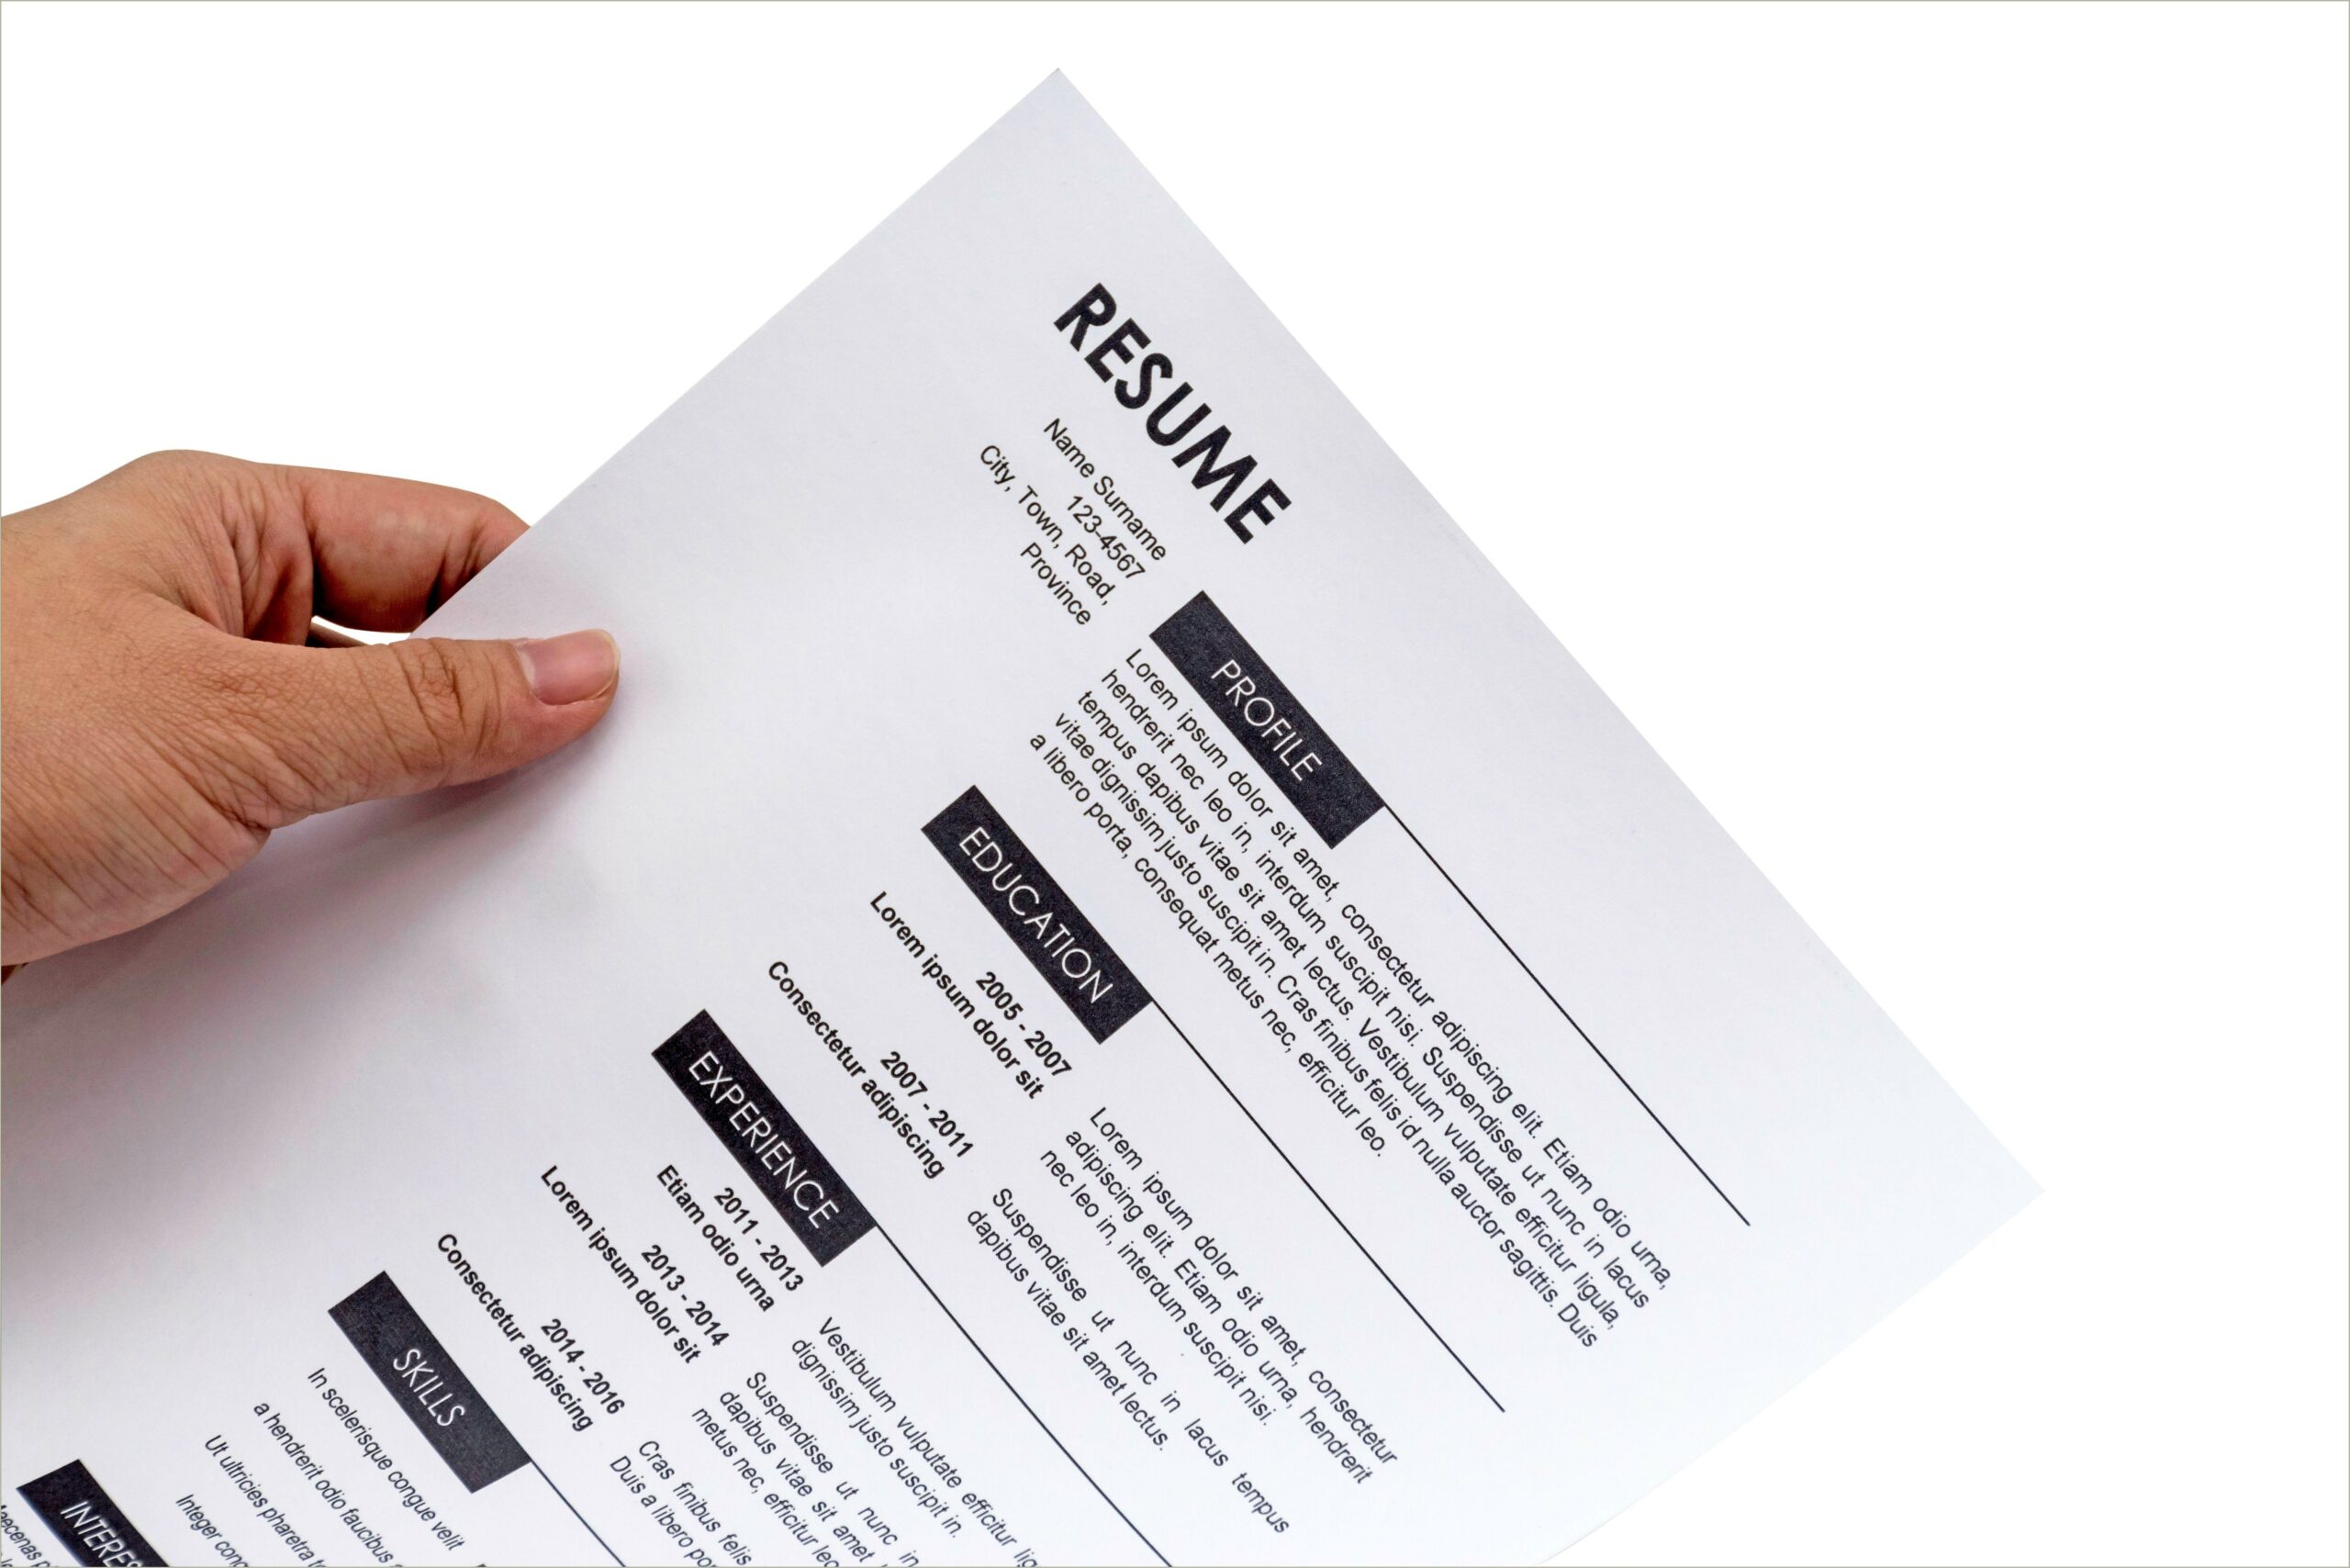 Cover Letter Format For Resume Download